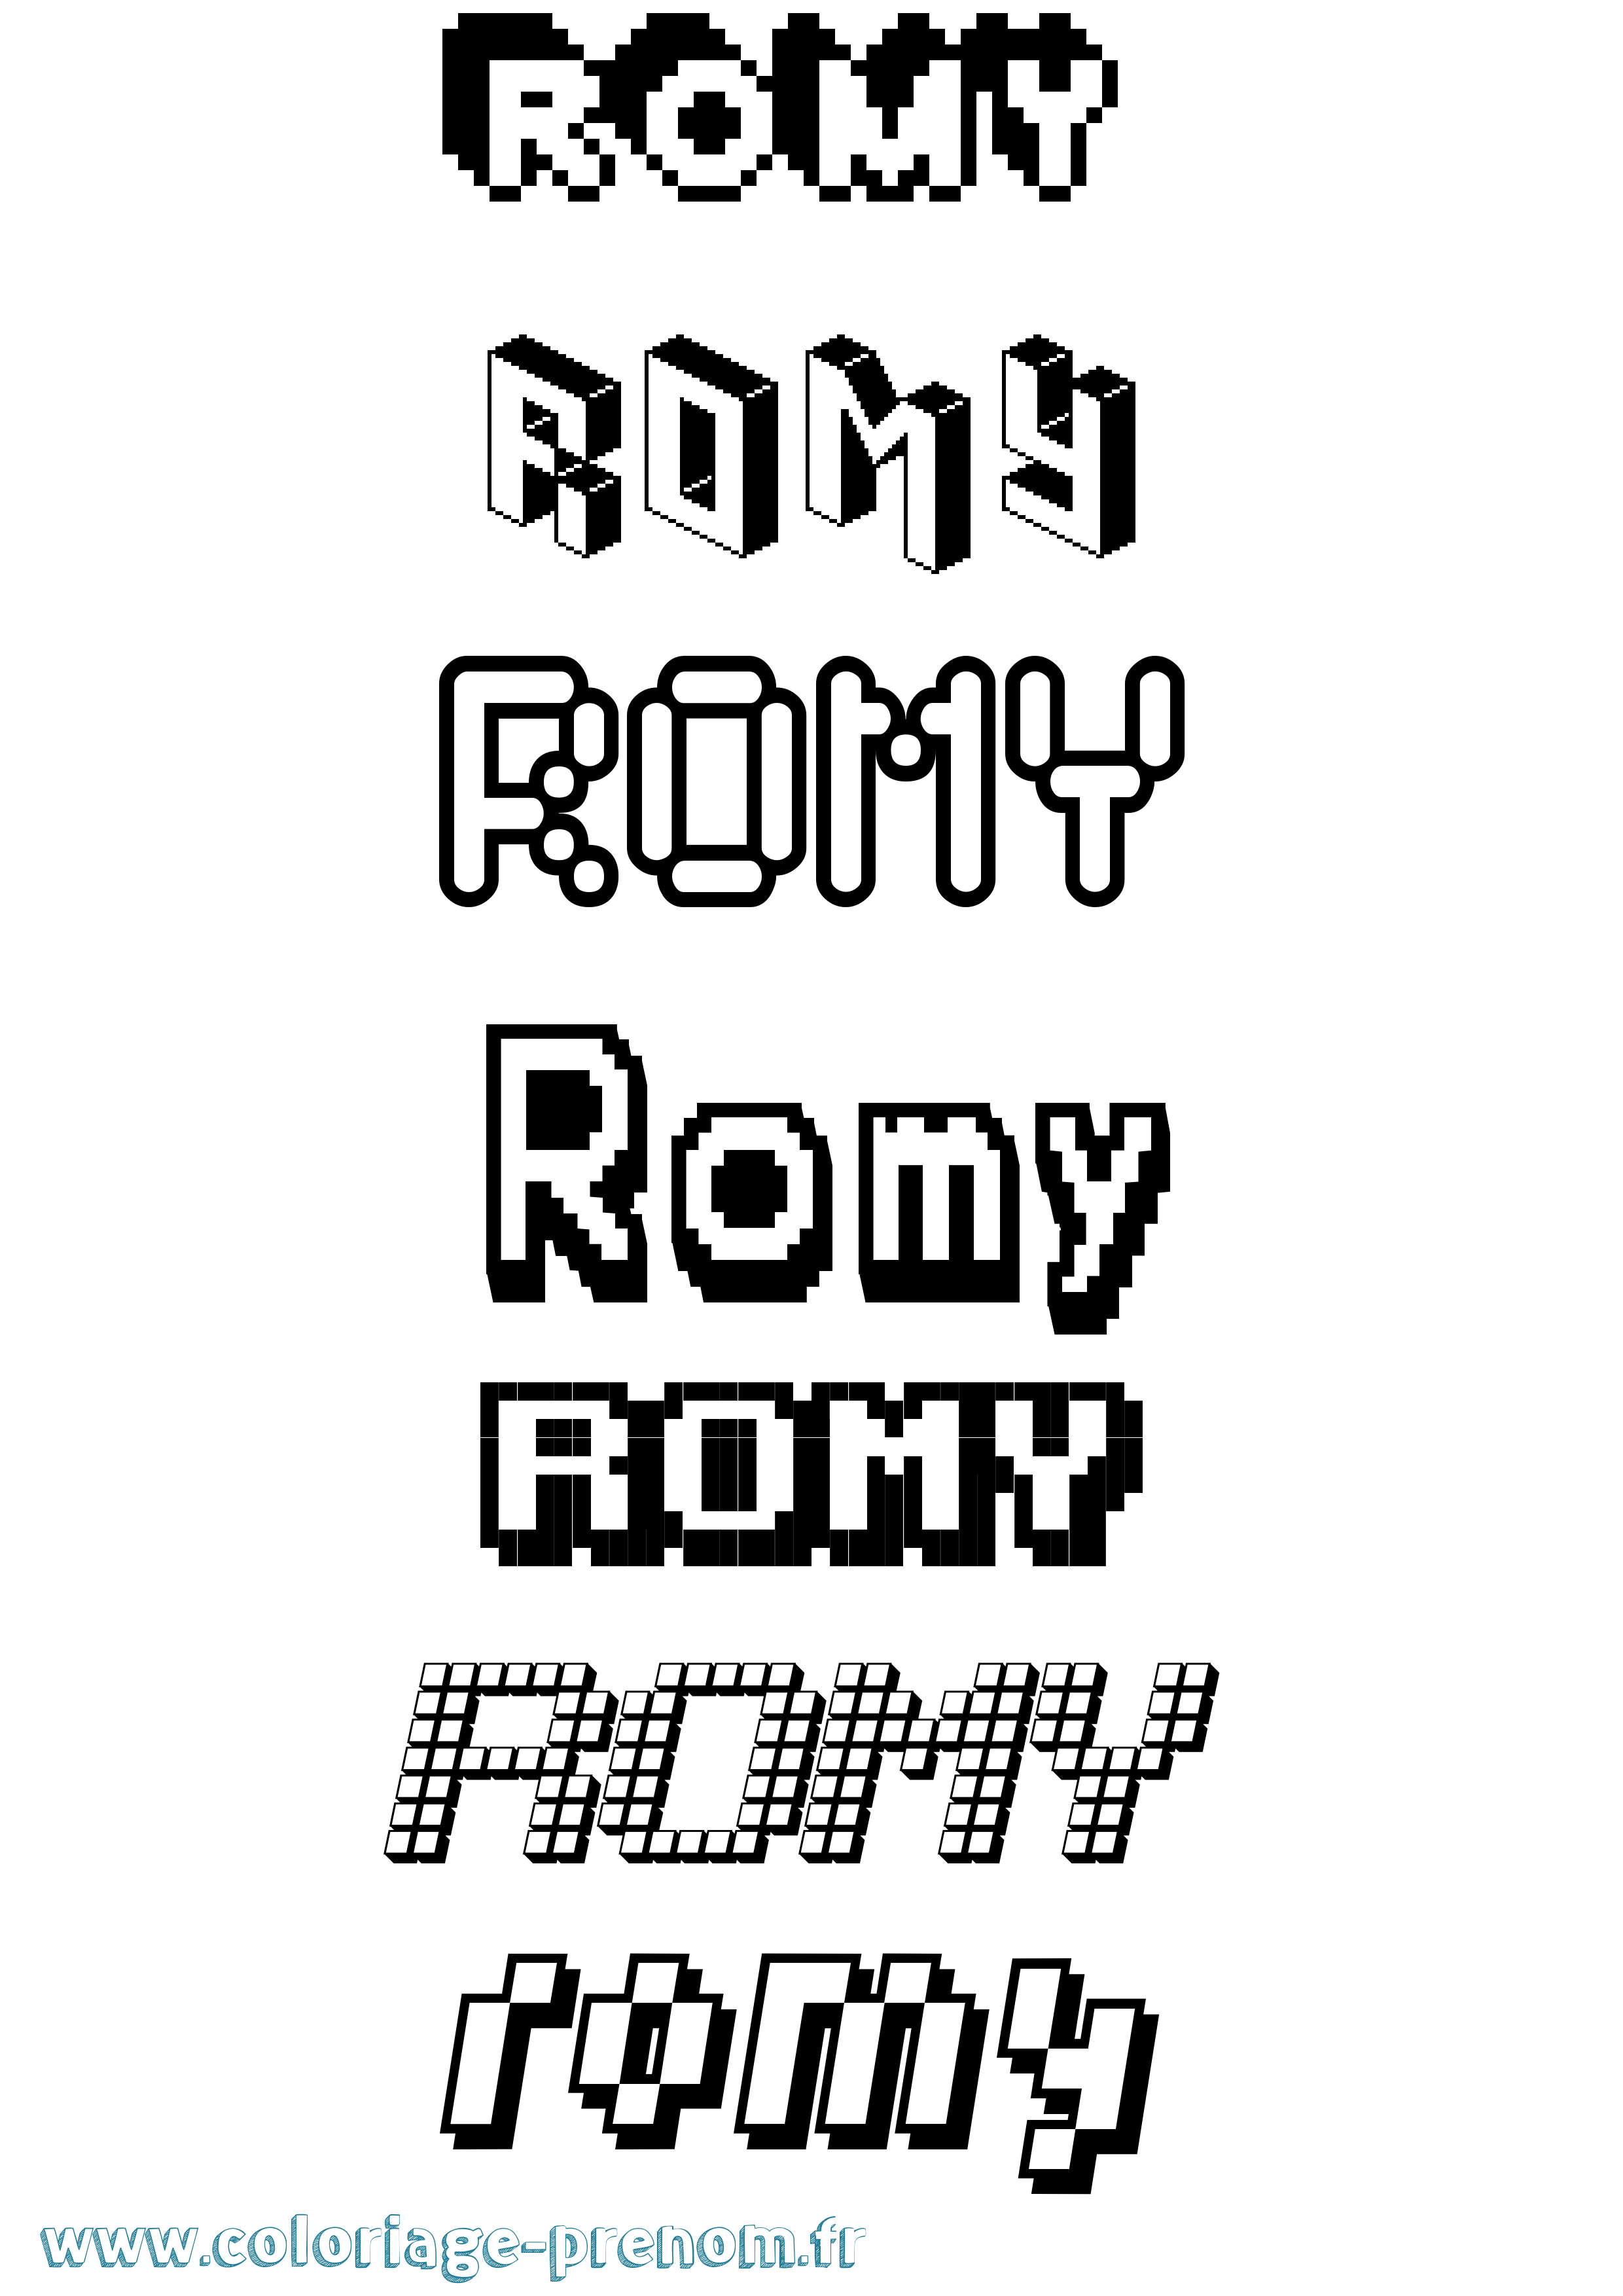 Coloriage prénom Romy Pixel